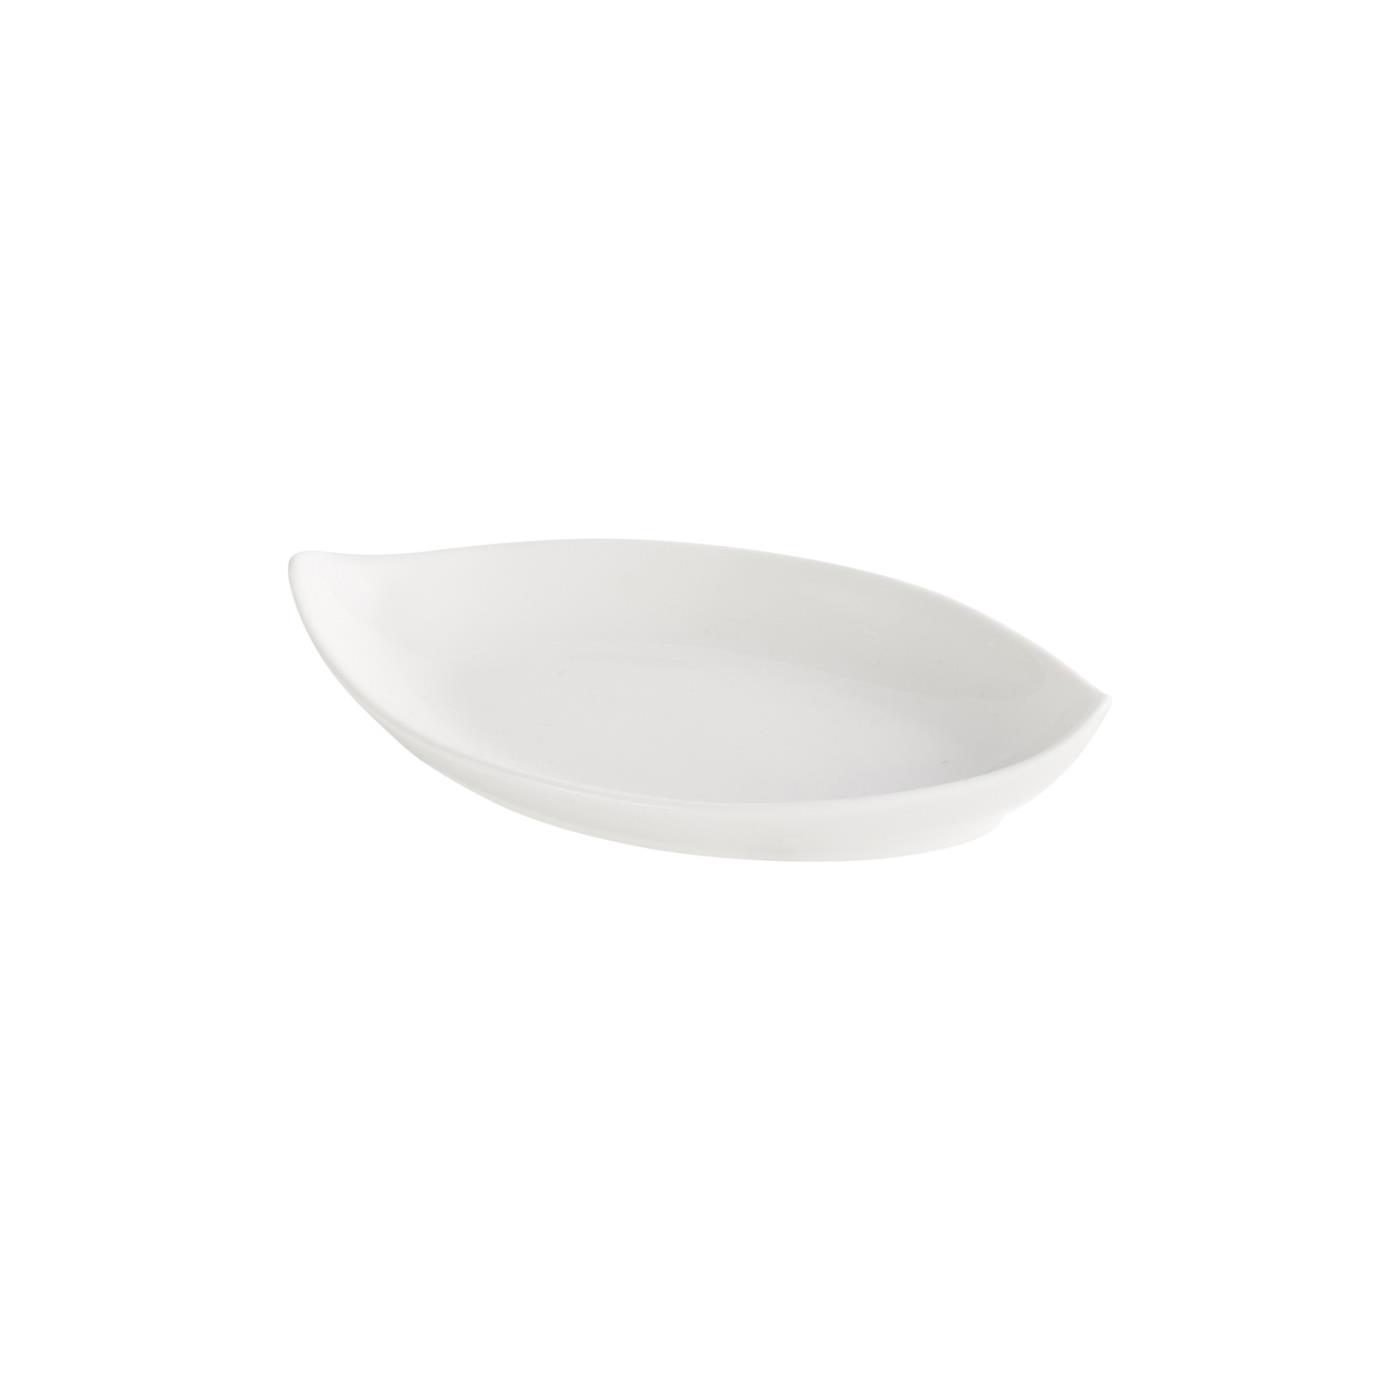 Ceramic Oval Point Tip Tasting Dish - Tasting Dish 5"